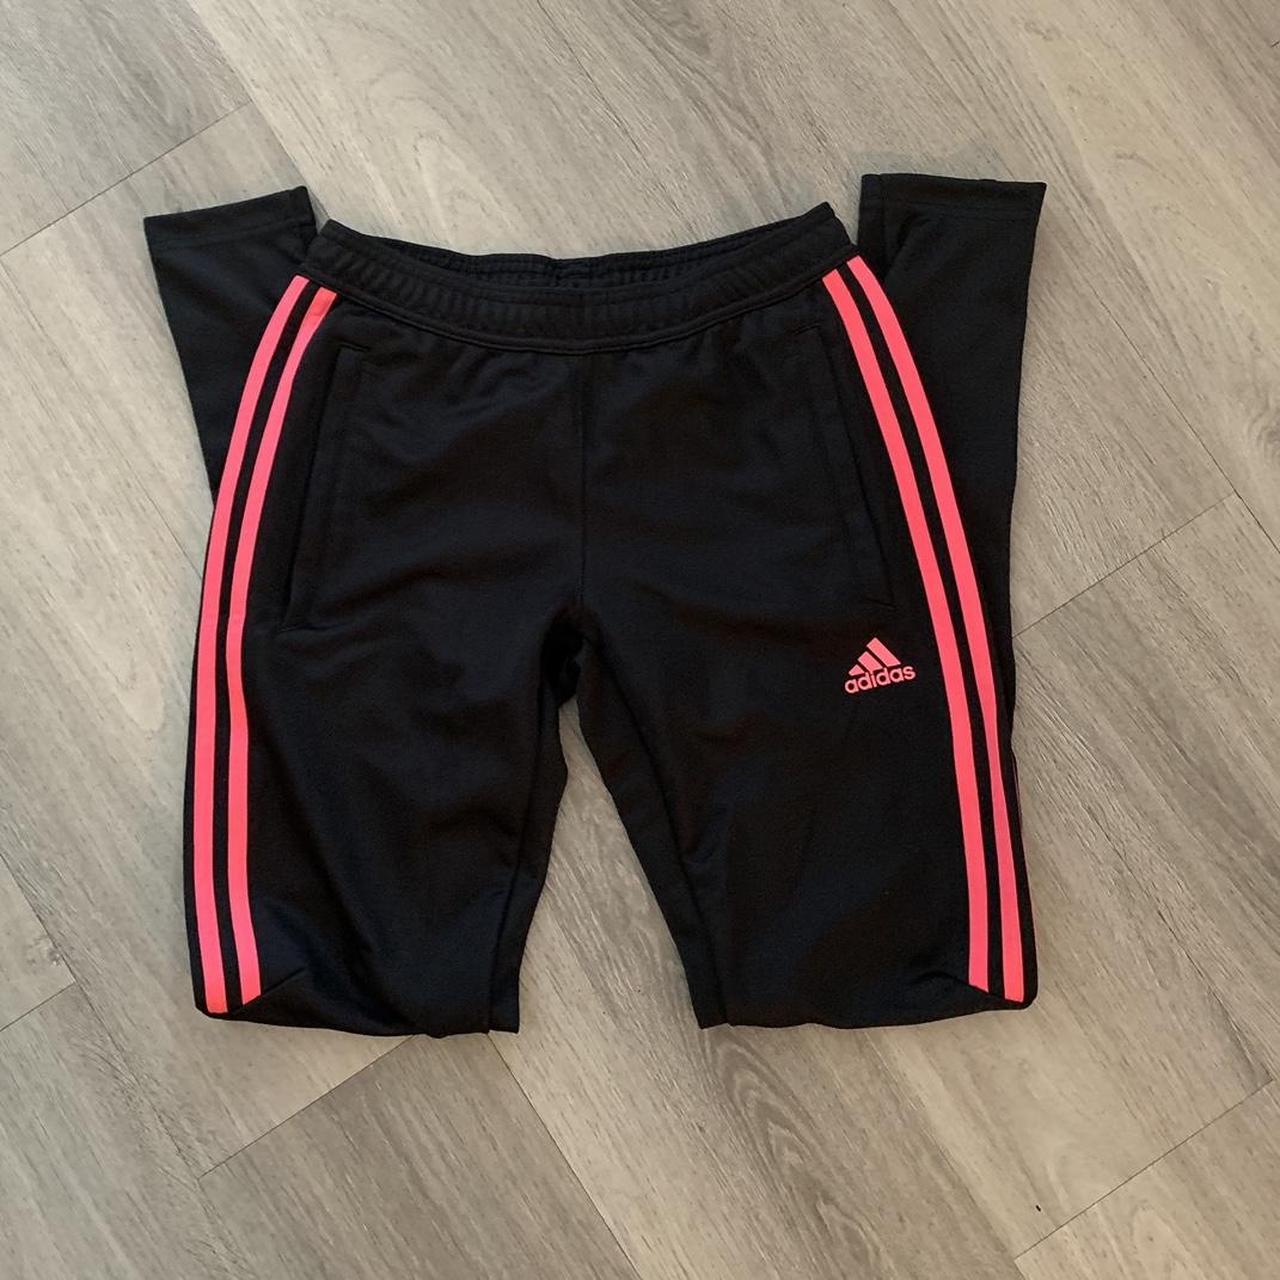 Pink Adidas Pants - Bottoms, Clothing